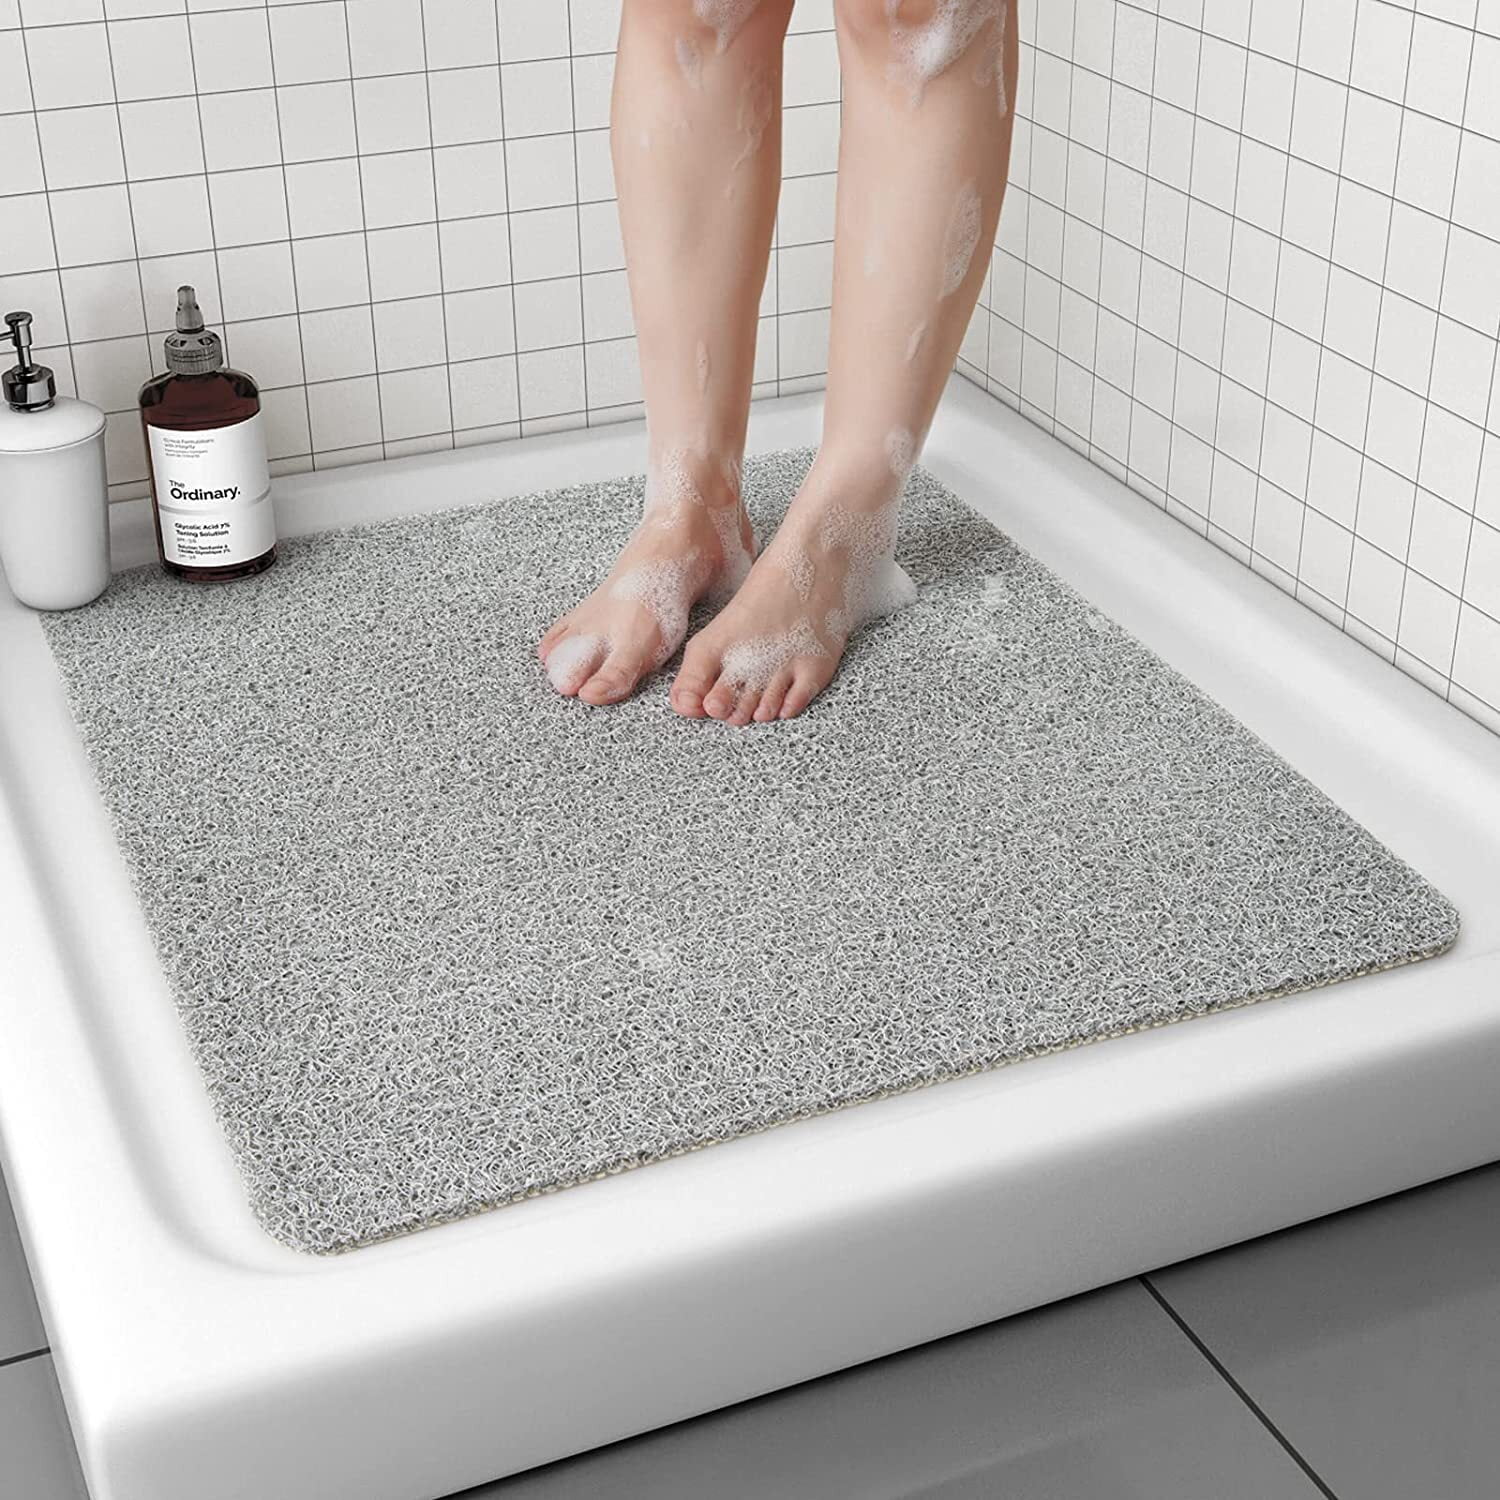 MontVoo Non Slip Bathtub Mat, 17X 30 inch, Shower Mats for Bath Tub, PVC Loofah Bathroom Mats for Wet Areas, Quick Drying